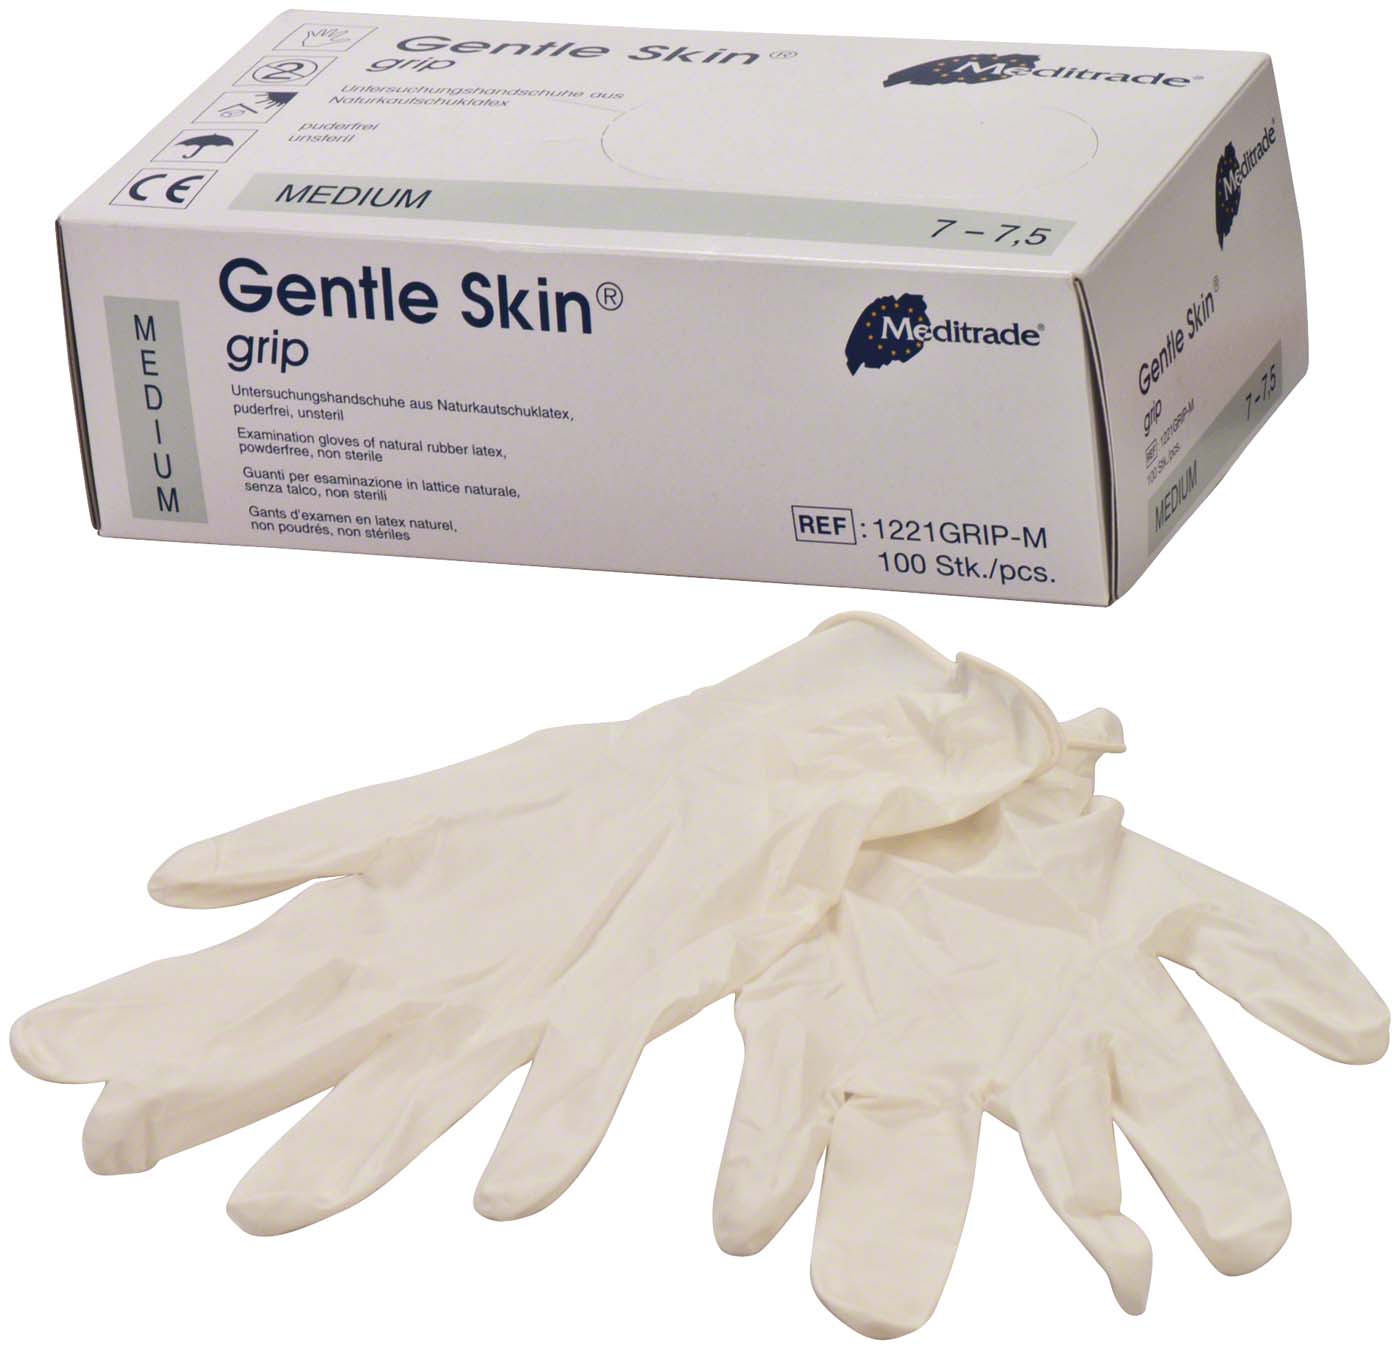 Gentle Skin® grip Meditrade